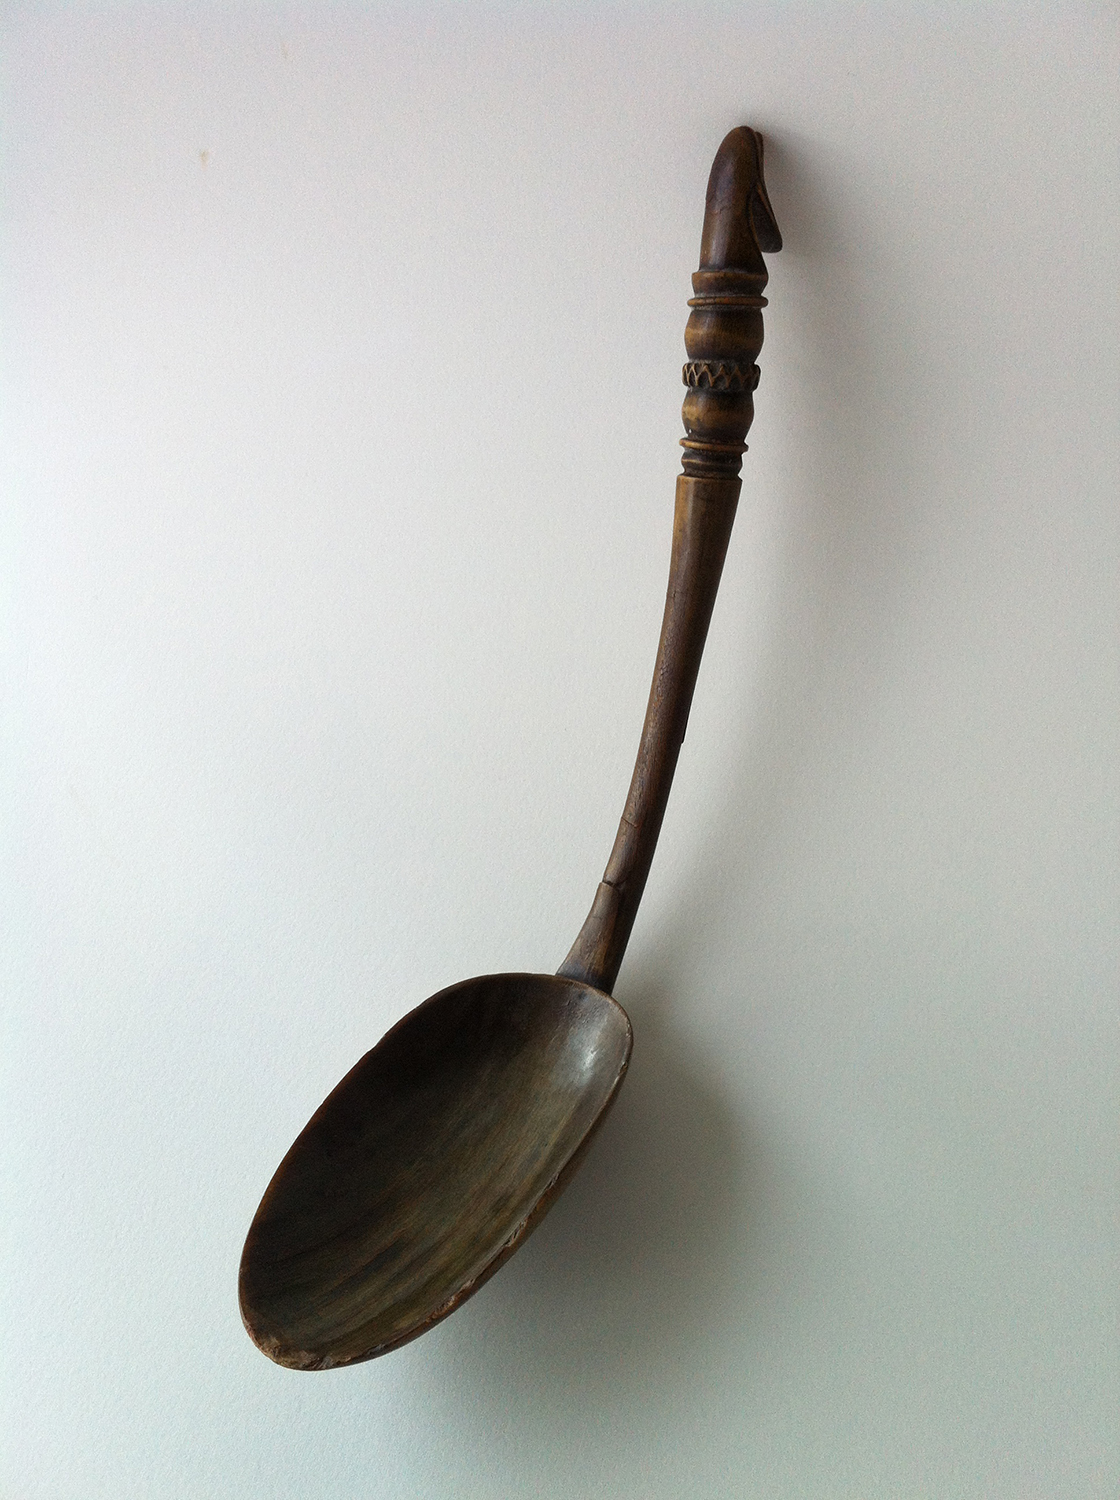 Catharine Bard Spoon | Fort Pitt Museum Blog